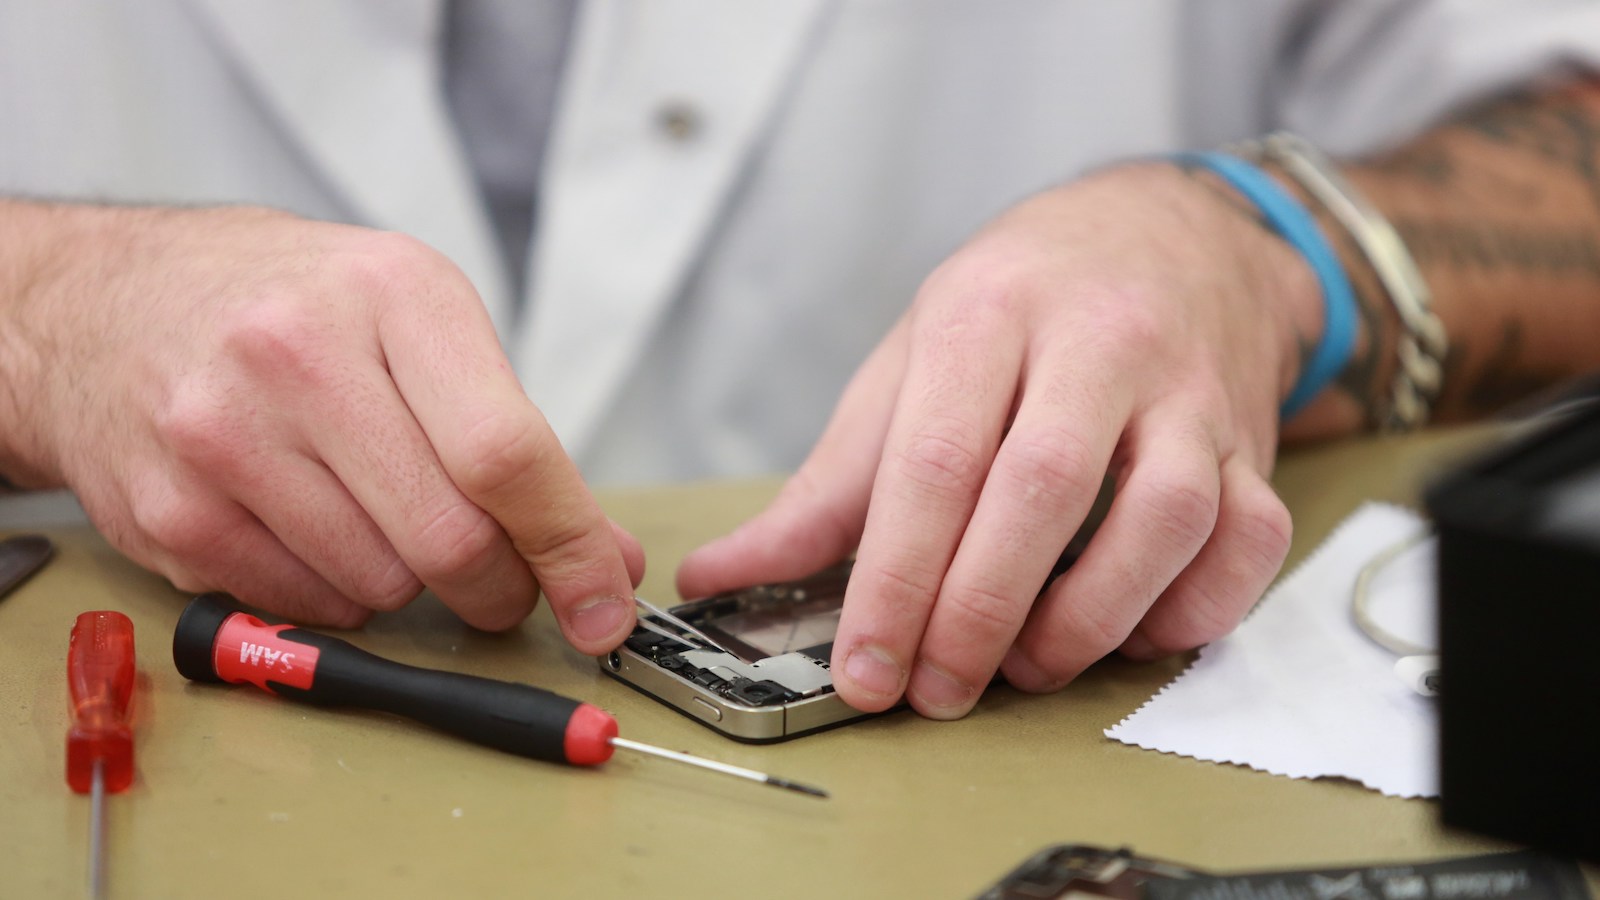 A technician repairs an iPhone